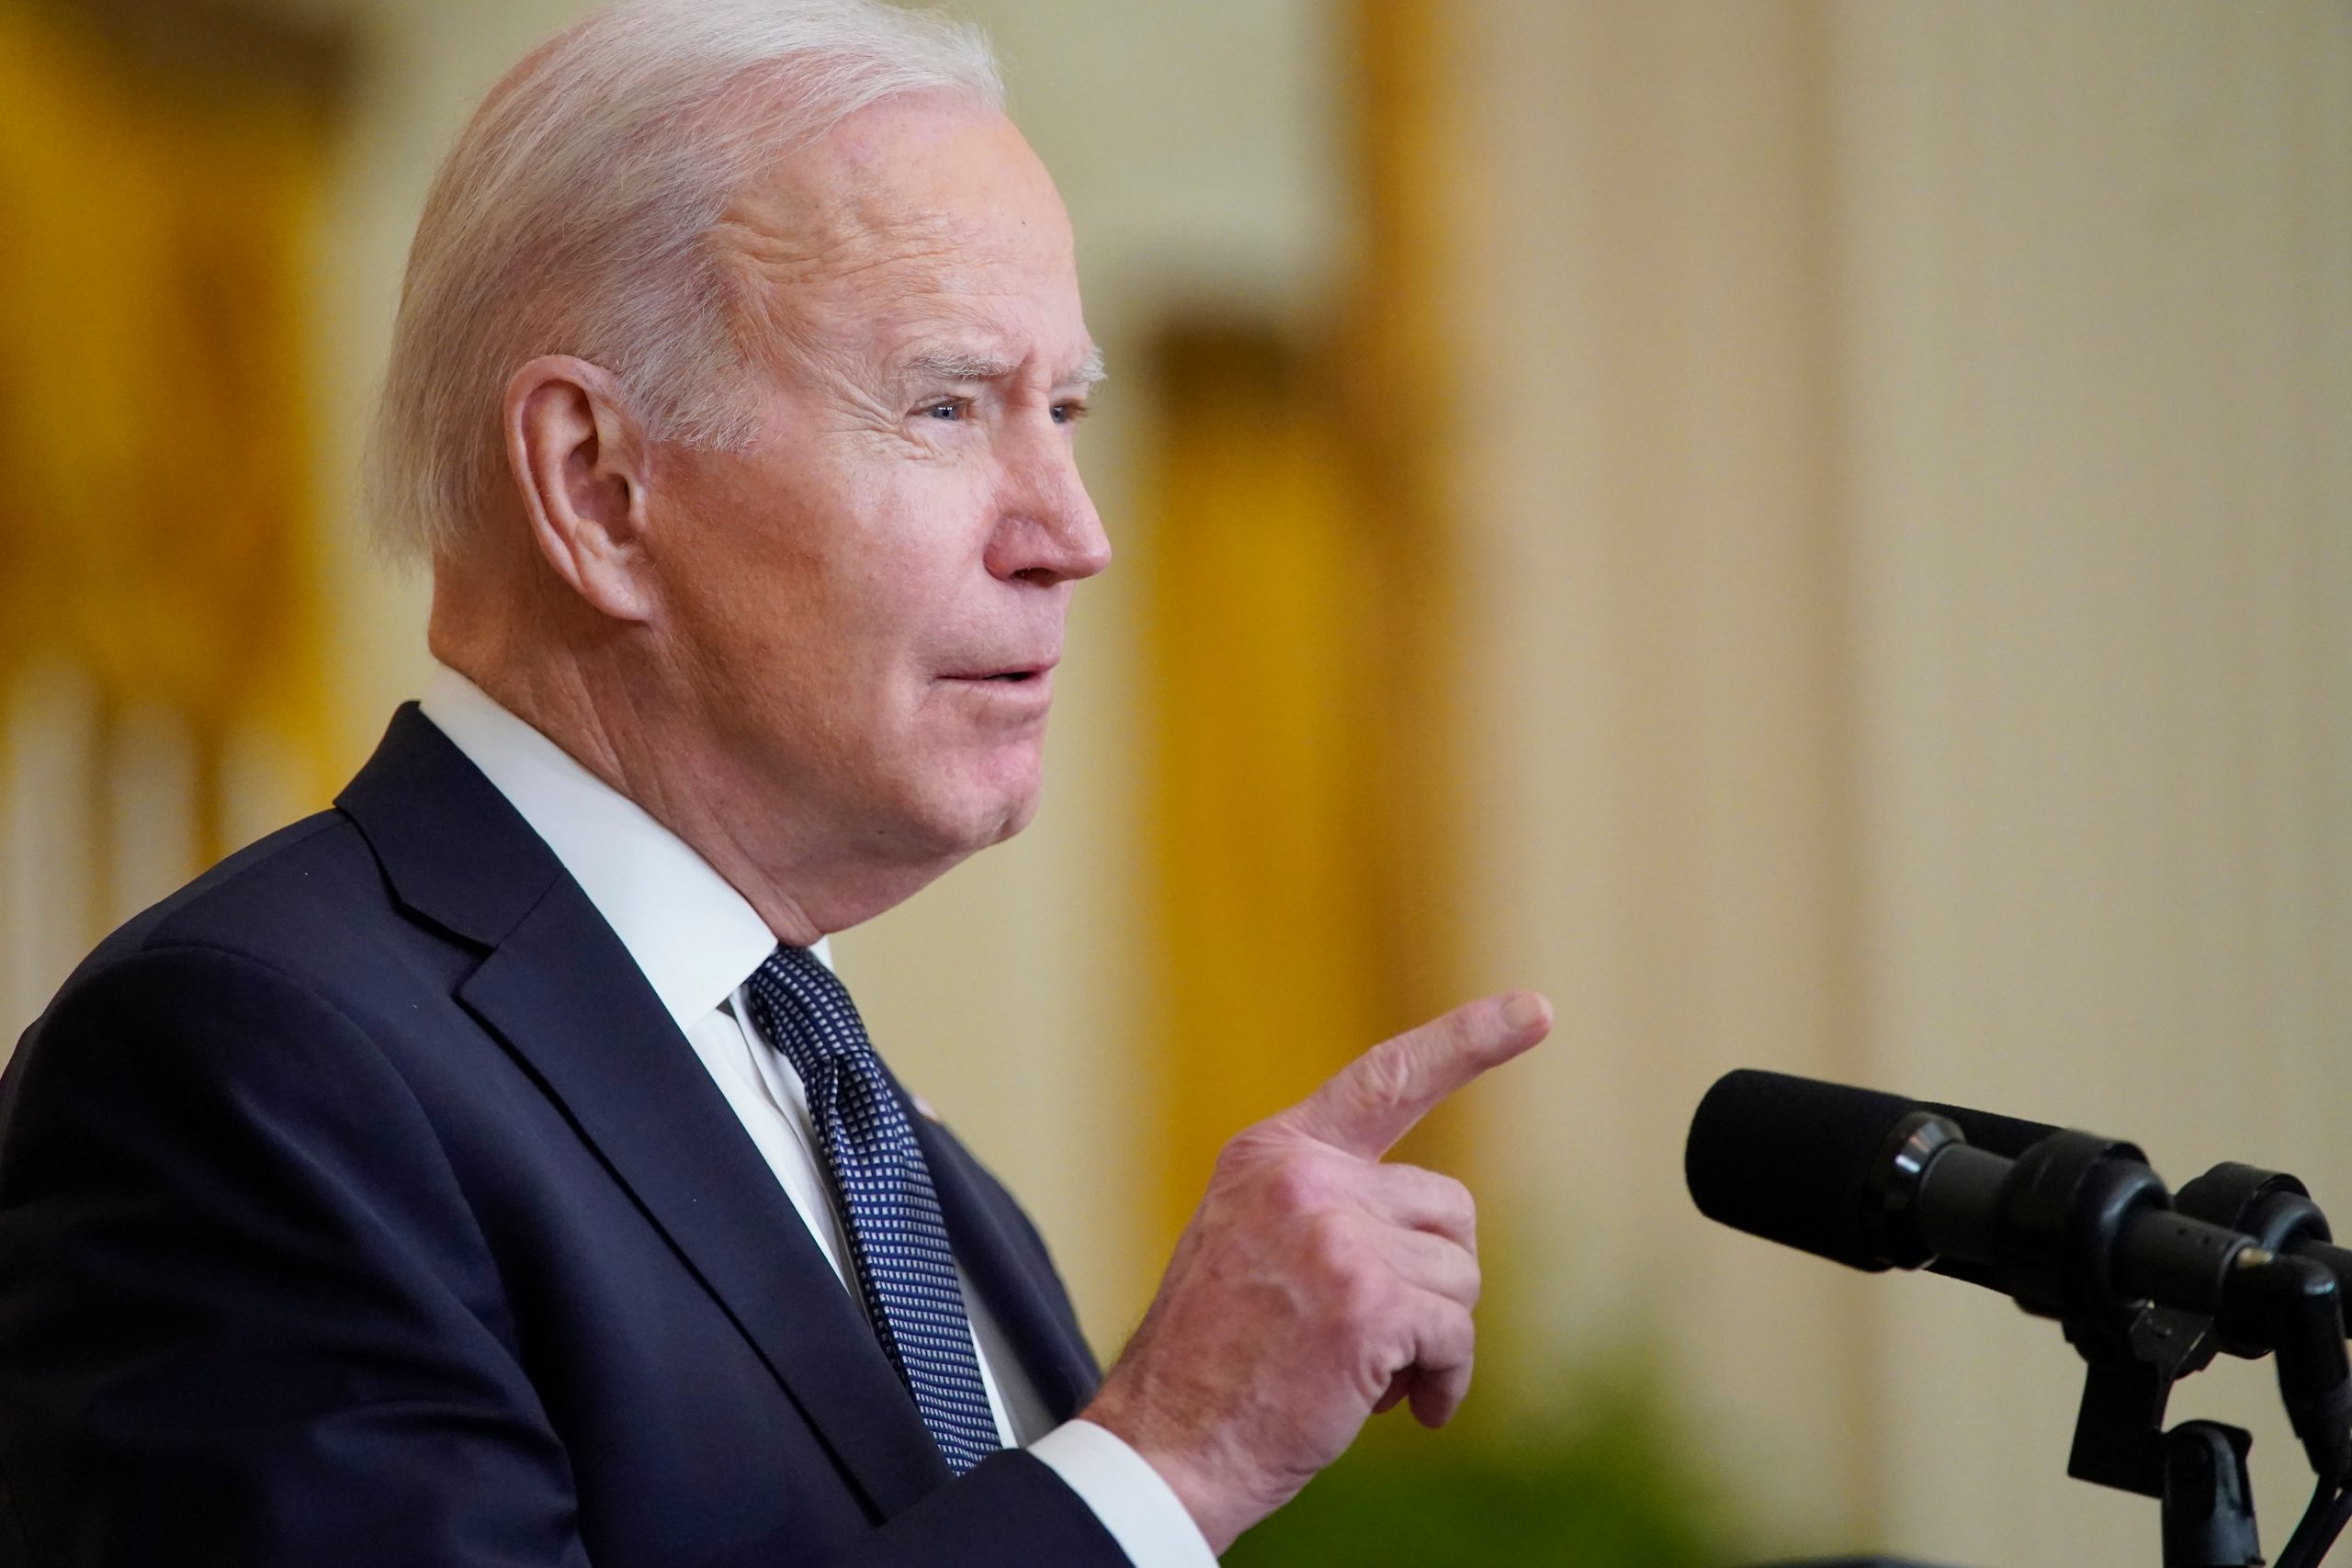 Will make sure Ukraine has weapons to defend against Russia: US President Joe Biden